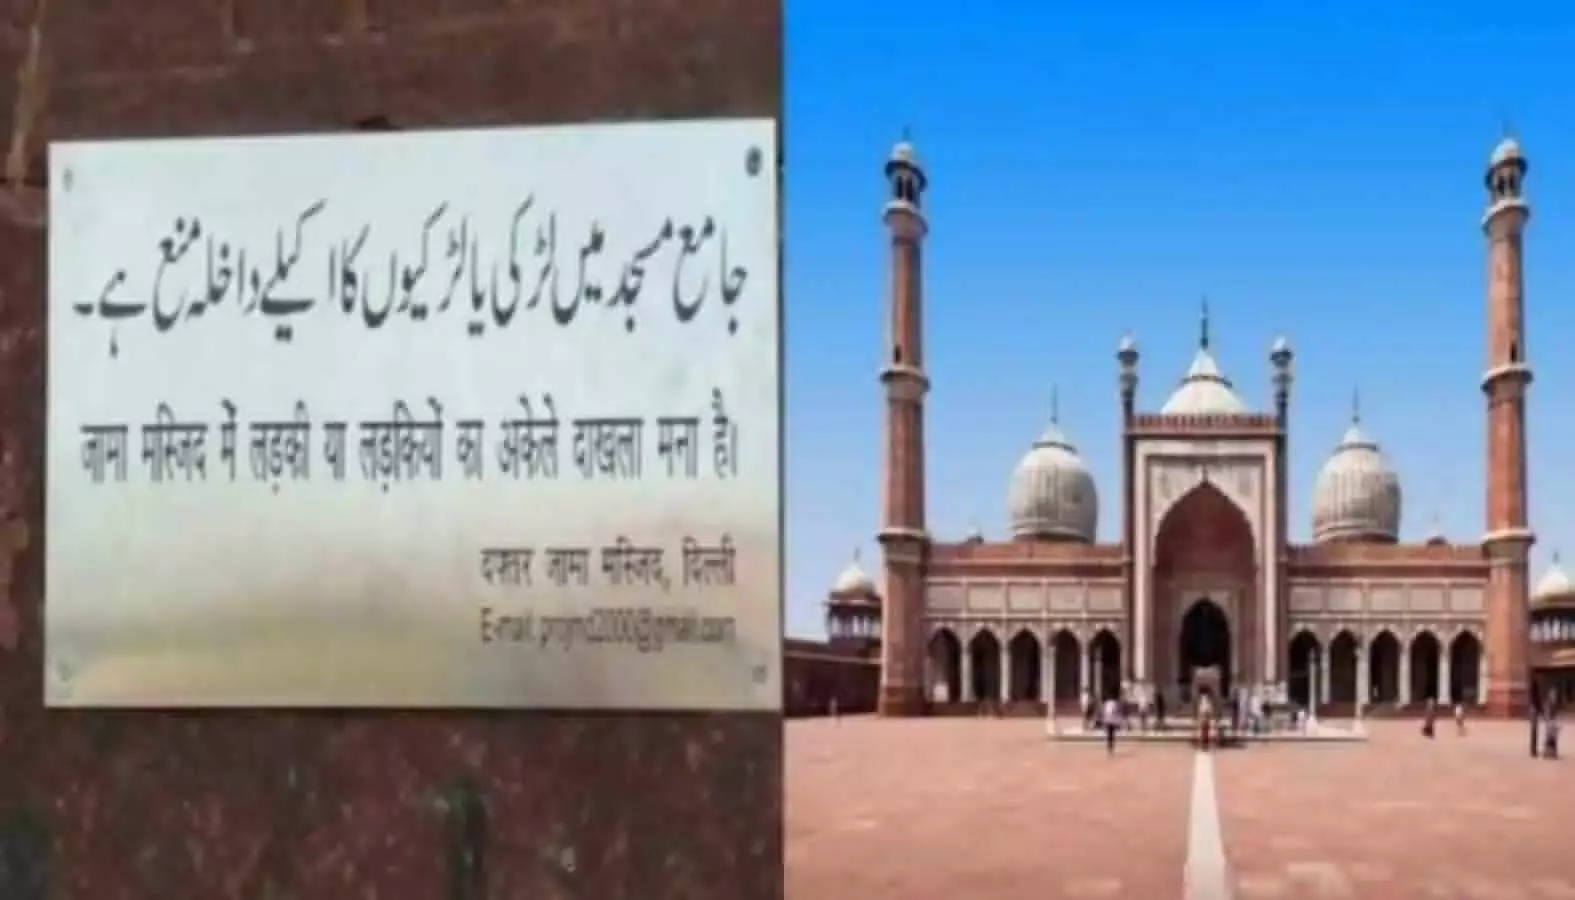 ban on entry of girls in delhi jama masjid lifted lg vk saxena talked to shahi imam bukhari